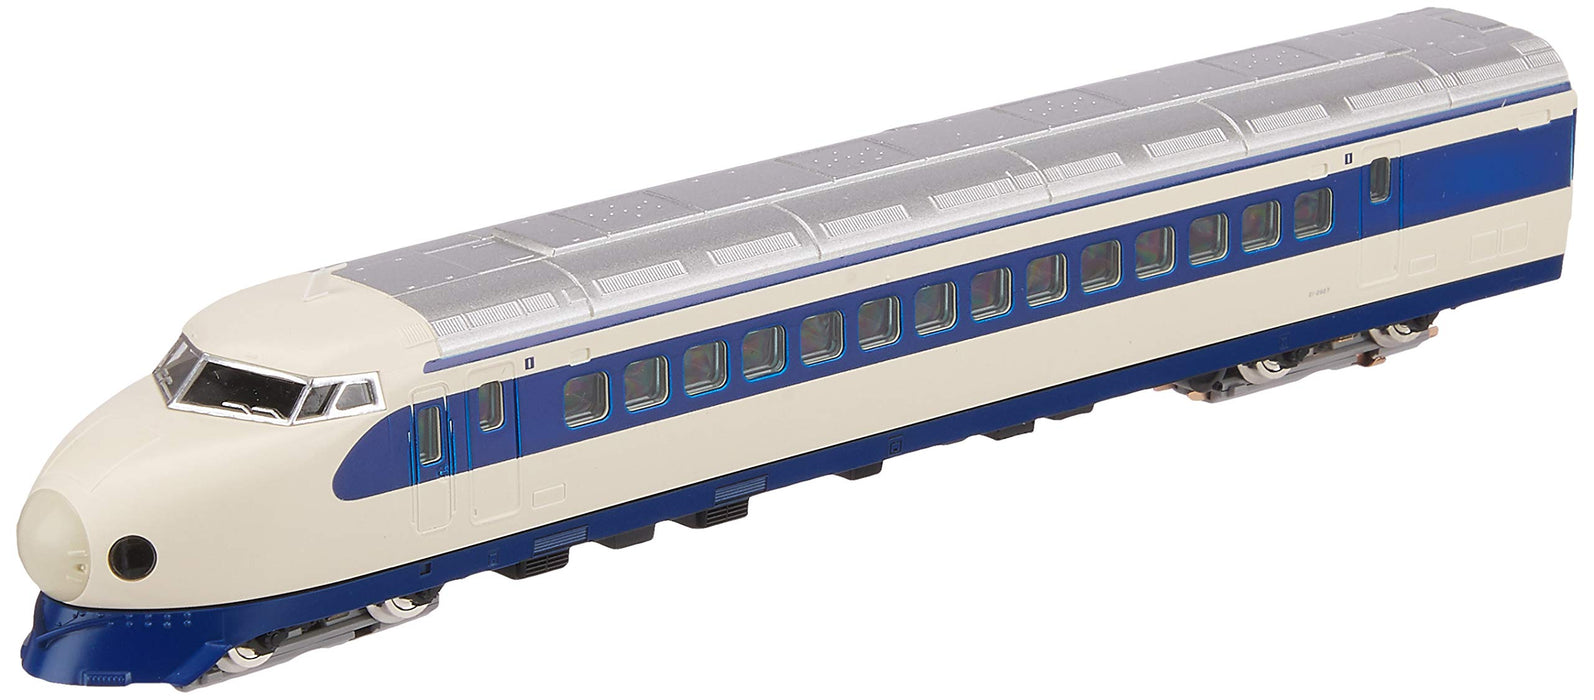 Tomytec Kodama FM-015 Train miniature – Série Tomix N Gauge 0-2000